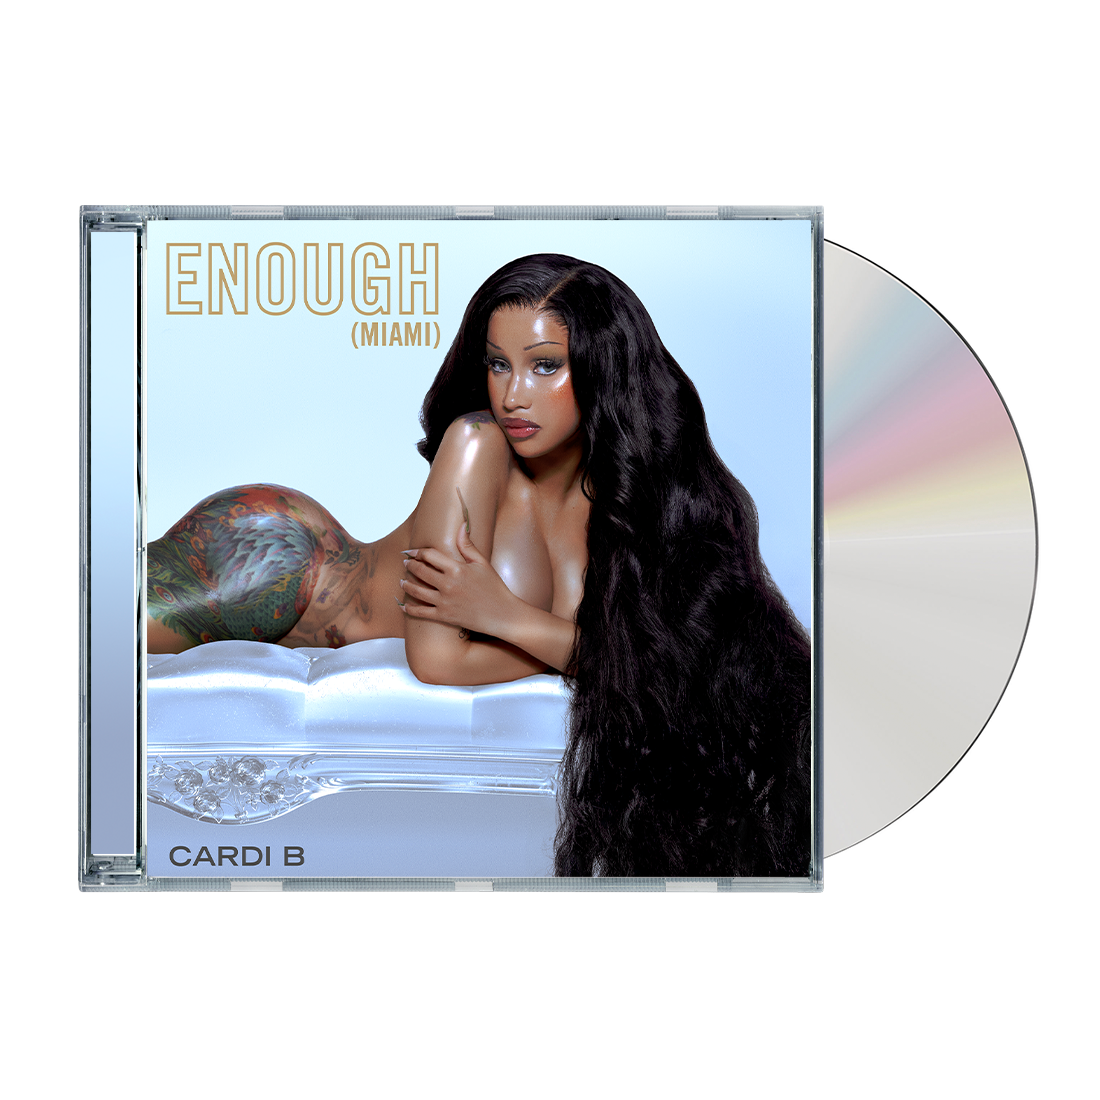 Enough (Miami) Limited CD Single